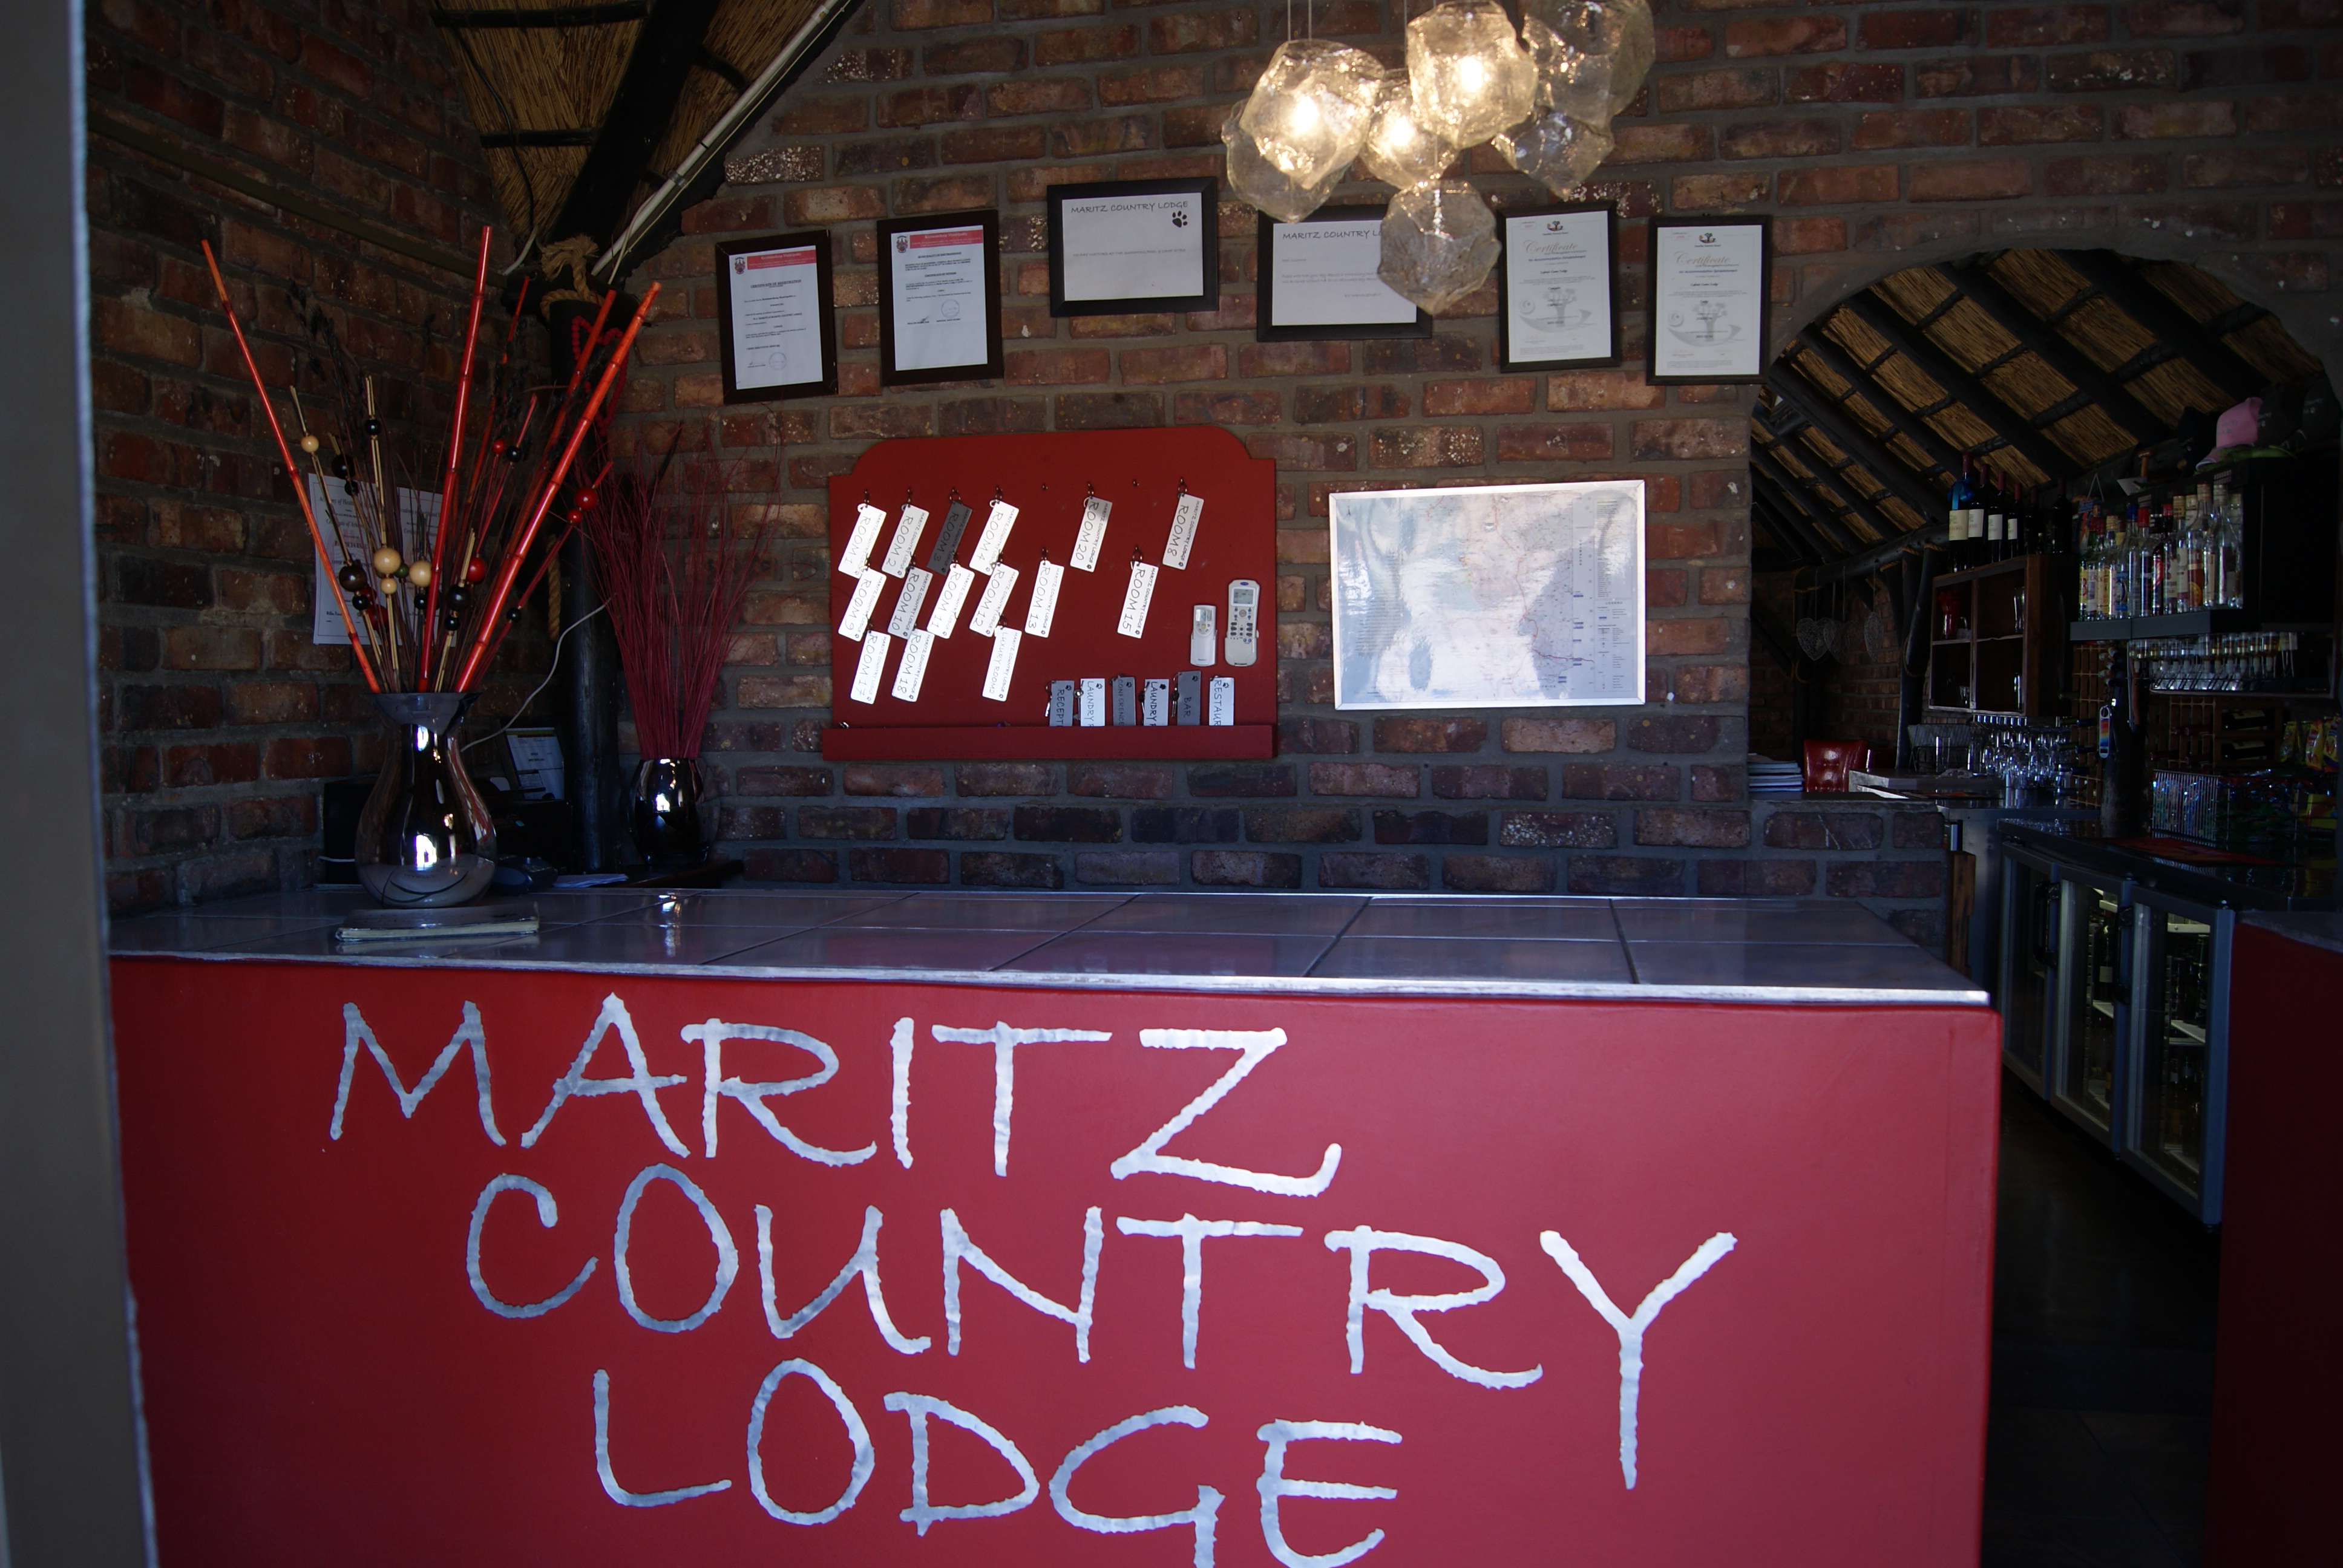 Maritz Country Lodge